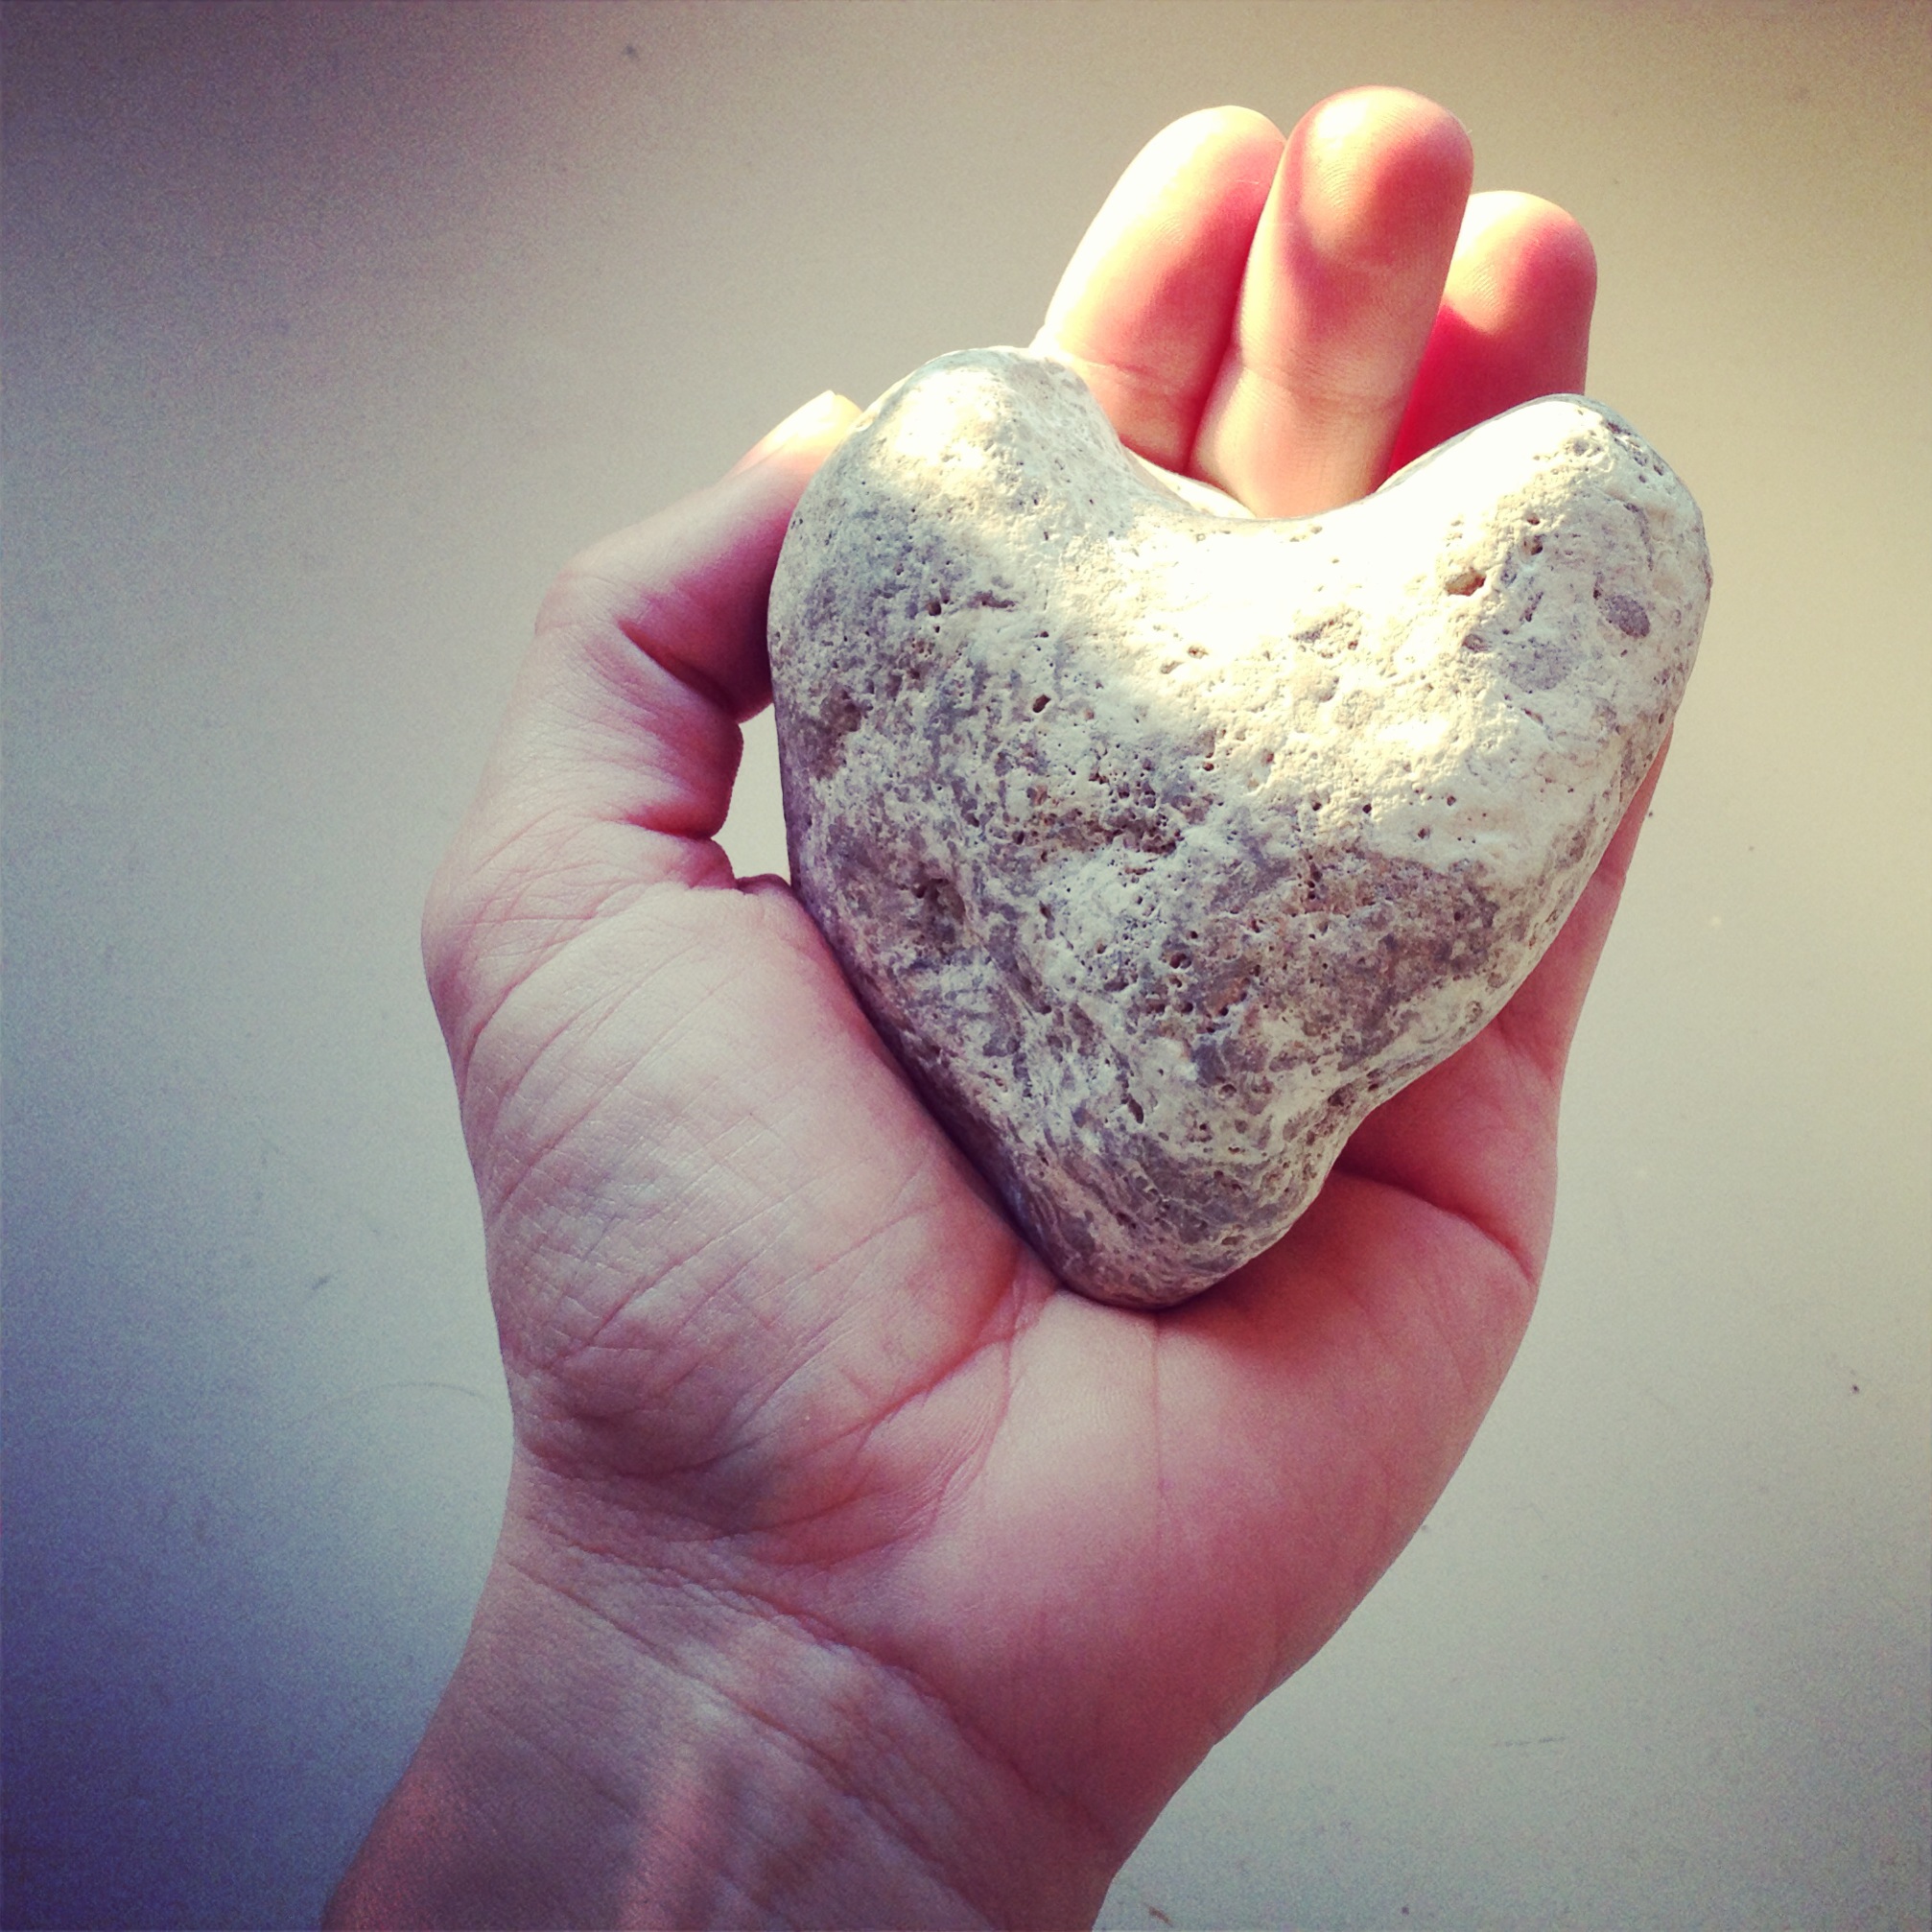 Heart in hand - Christina Rosalie